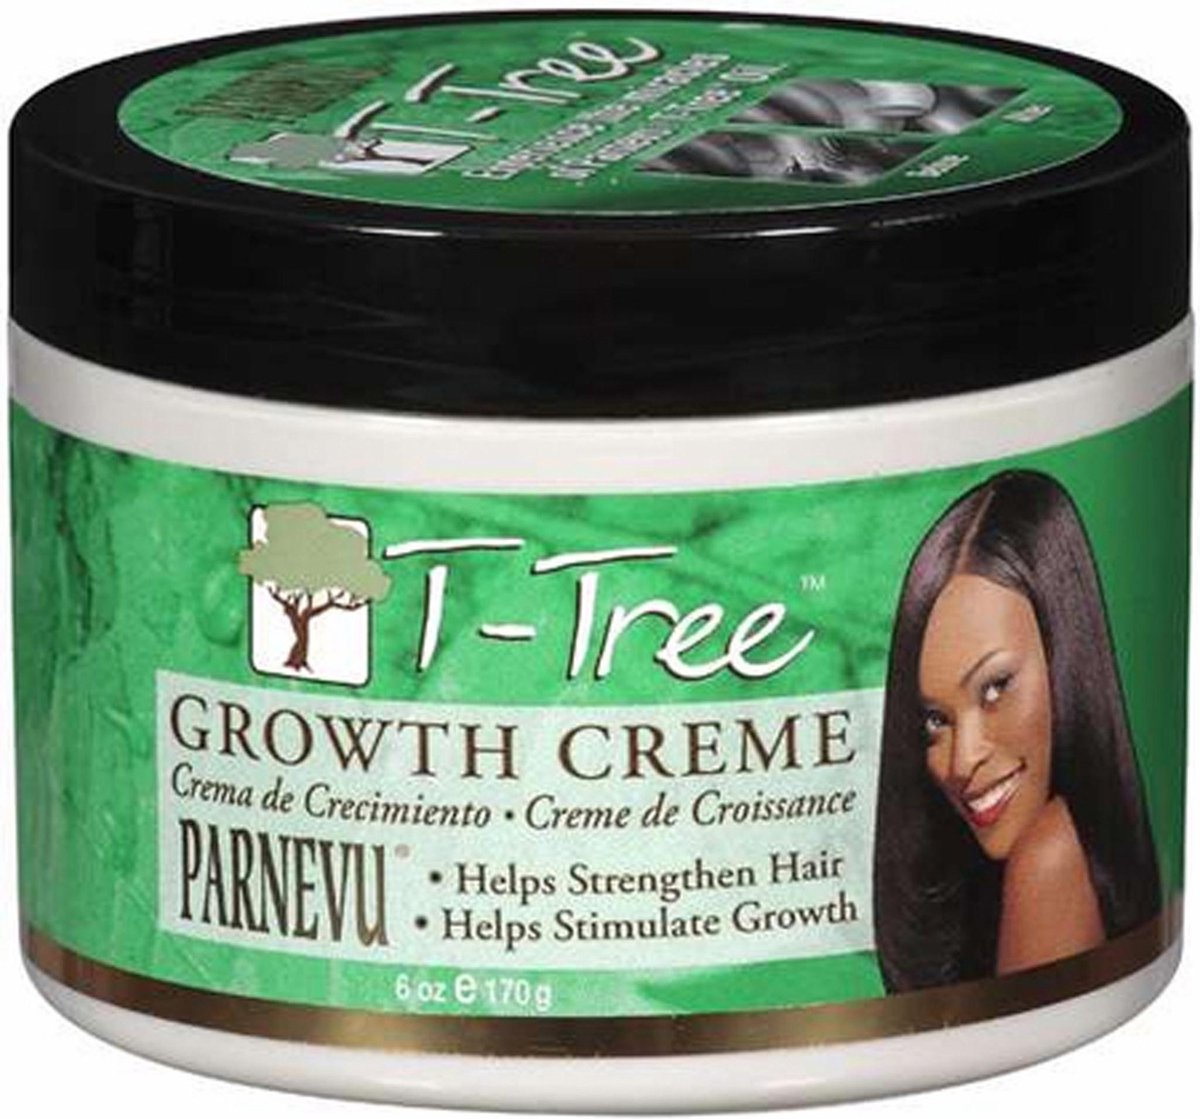 Parnevu T-Tree Growth Cream 6 Oz.